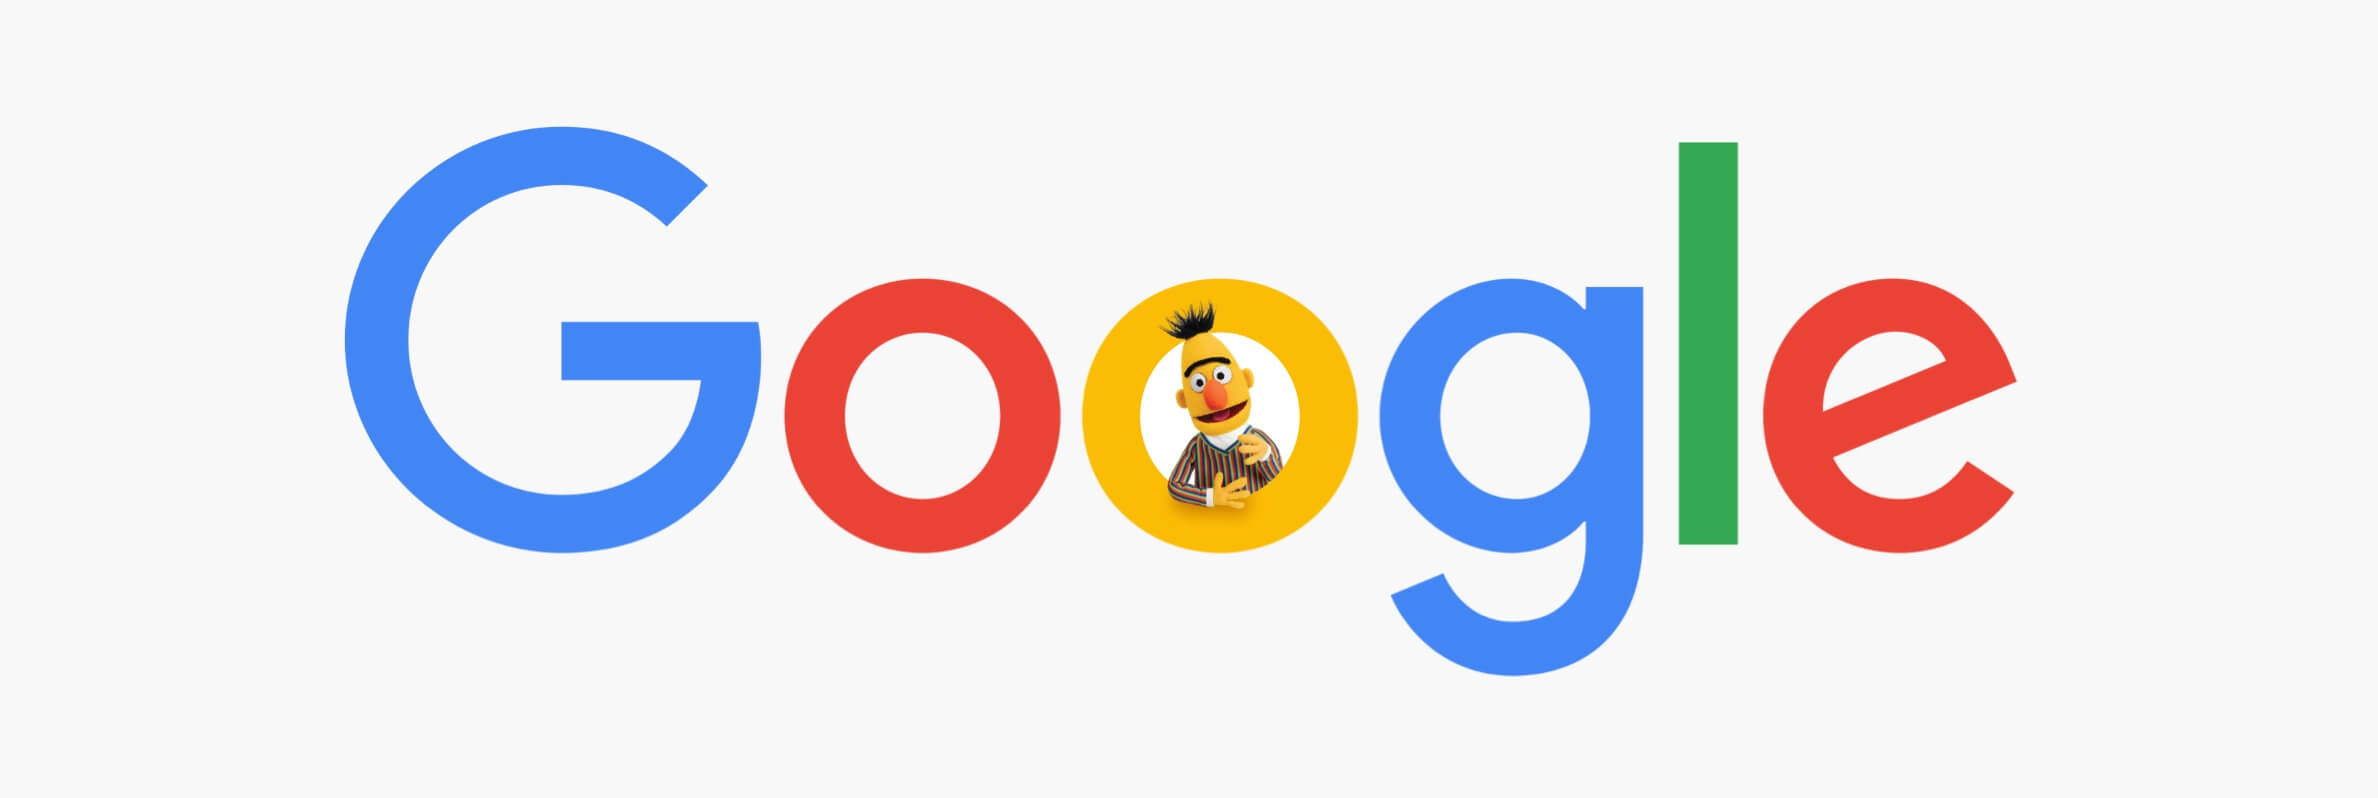 BERT google update